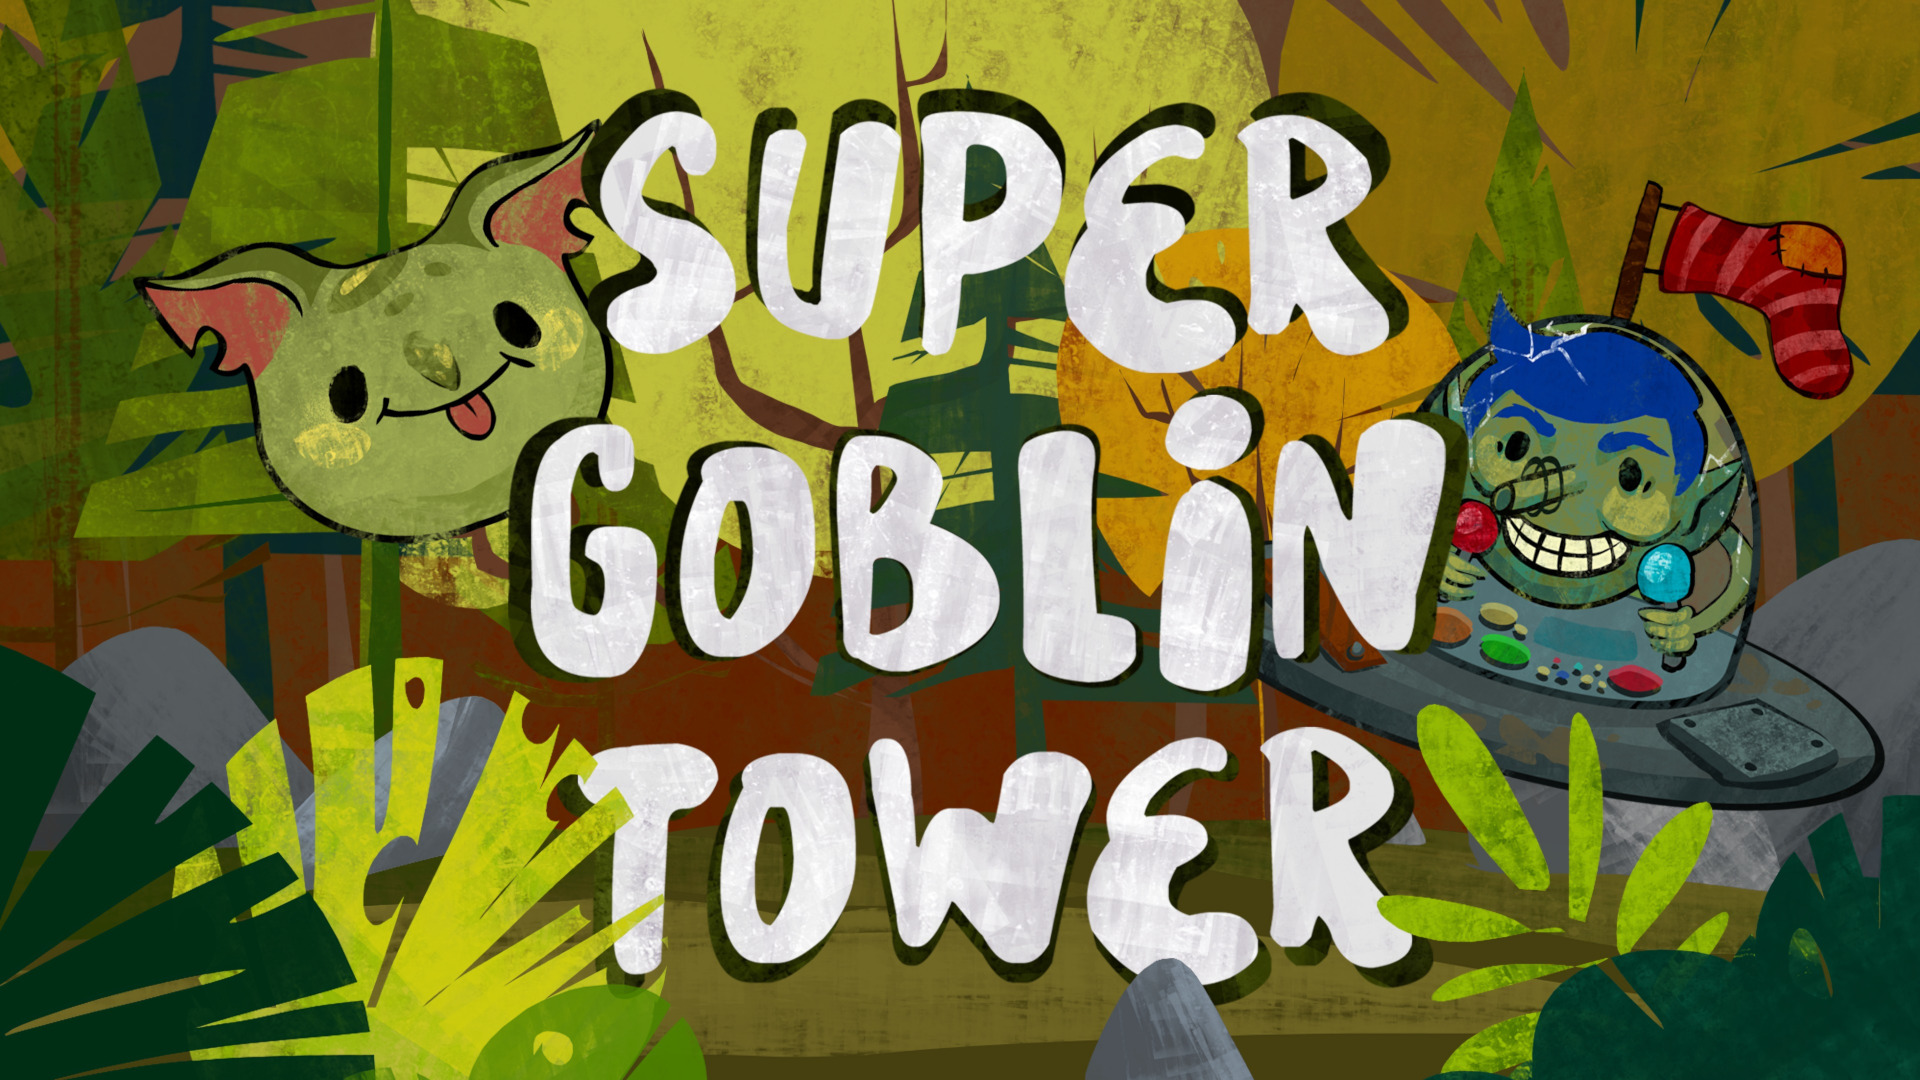 Super goblin tower